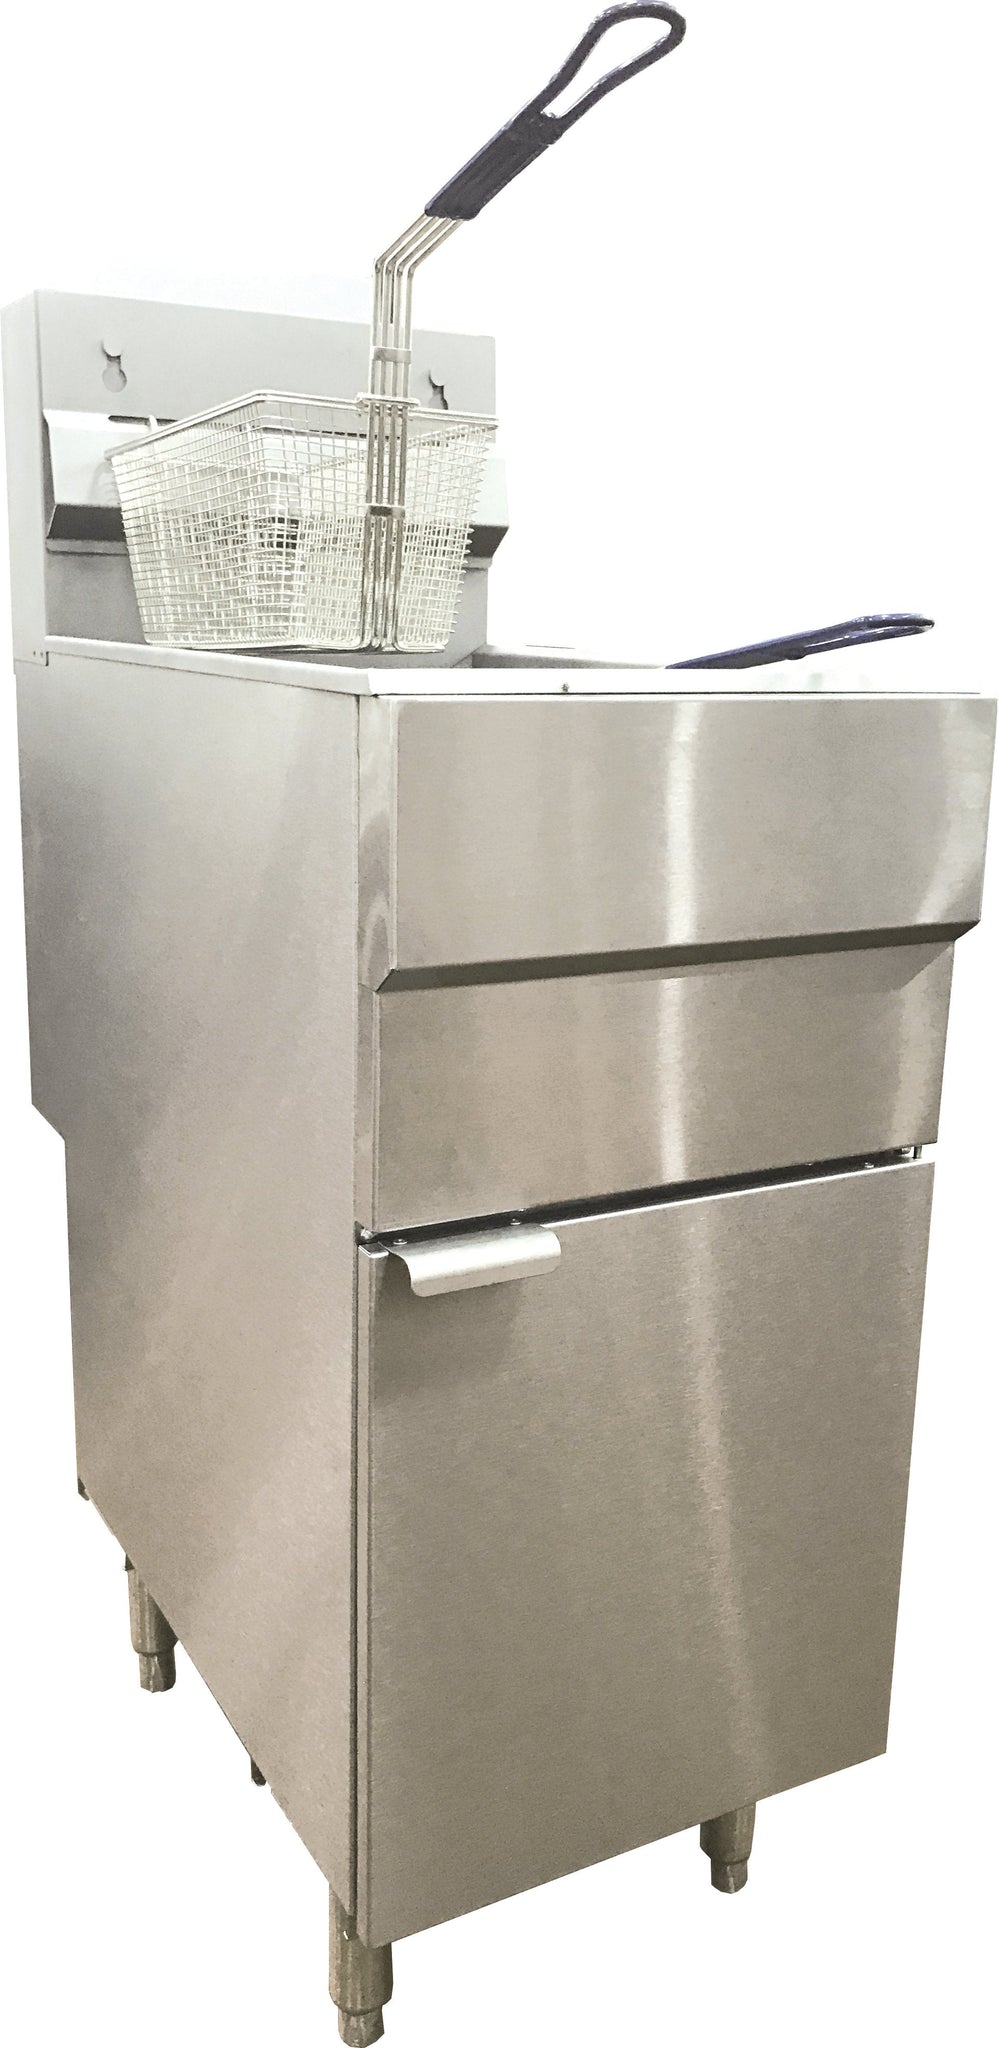 Omcan - Propane Fryer with 45-50 lbs Capacity - CE-CN-0025-FP